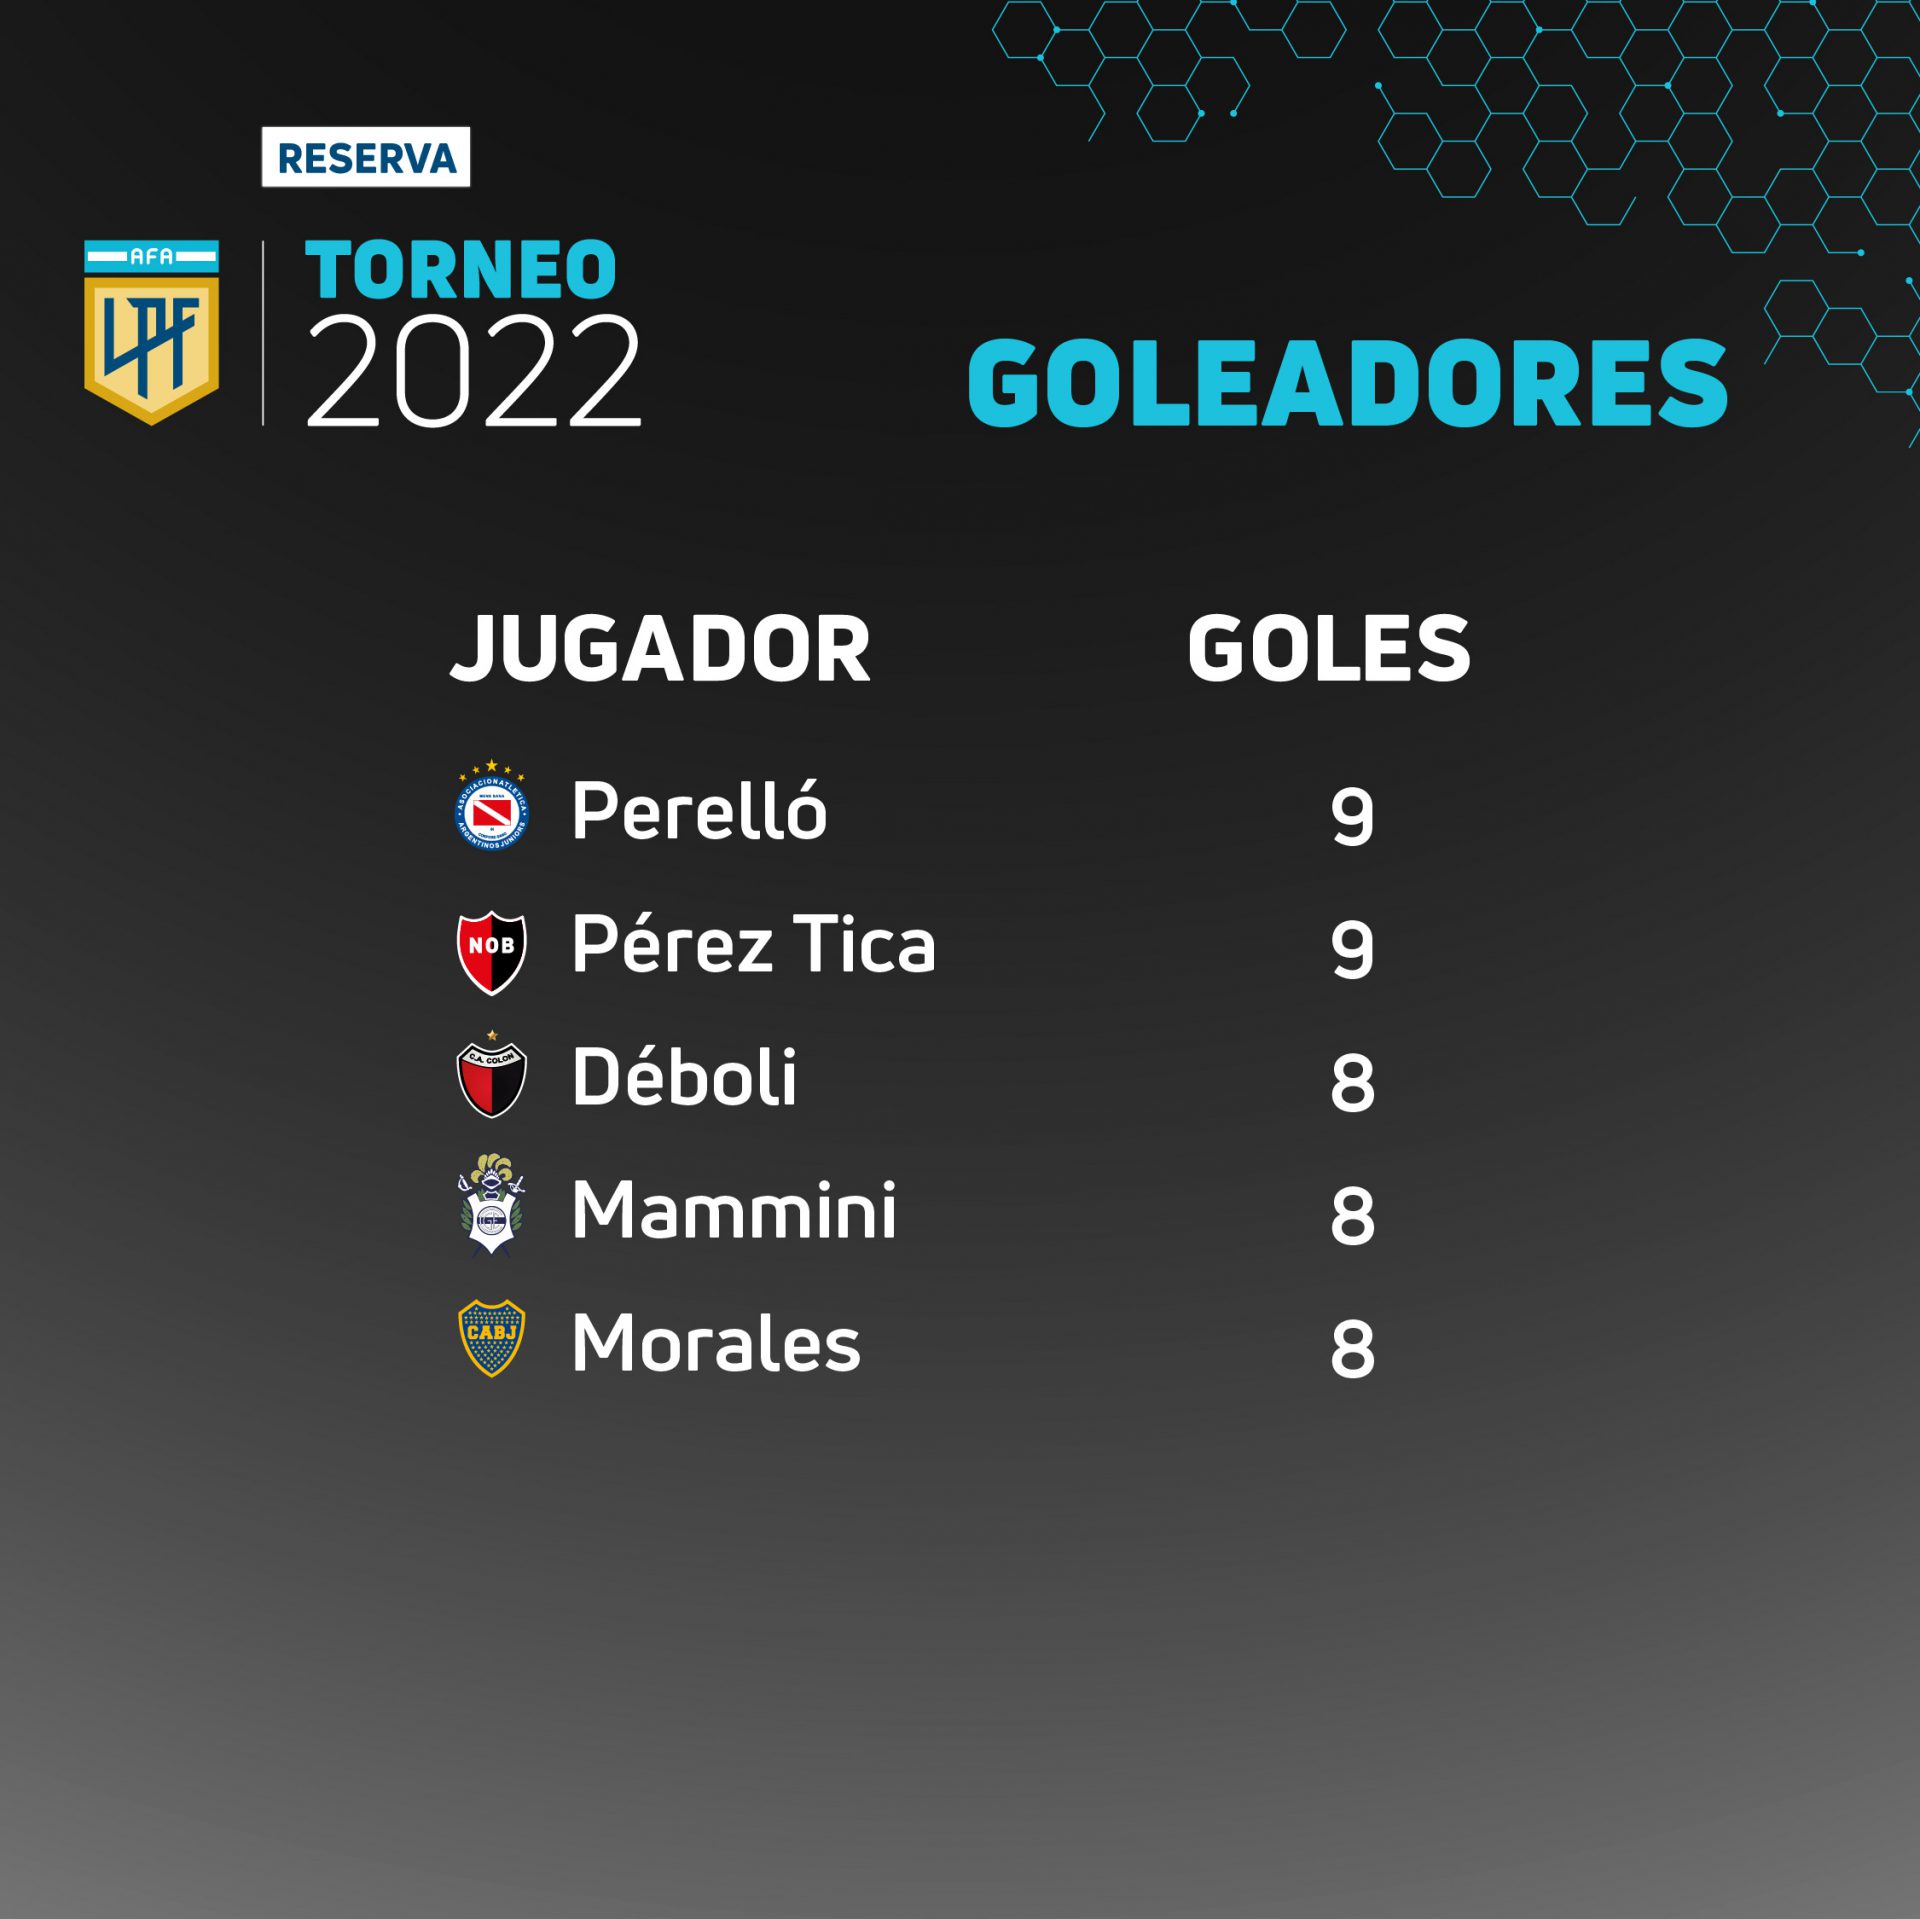 Goleadores-02